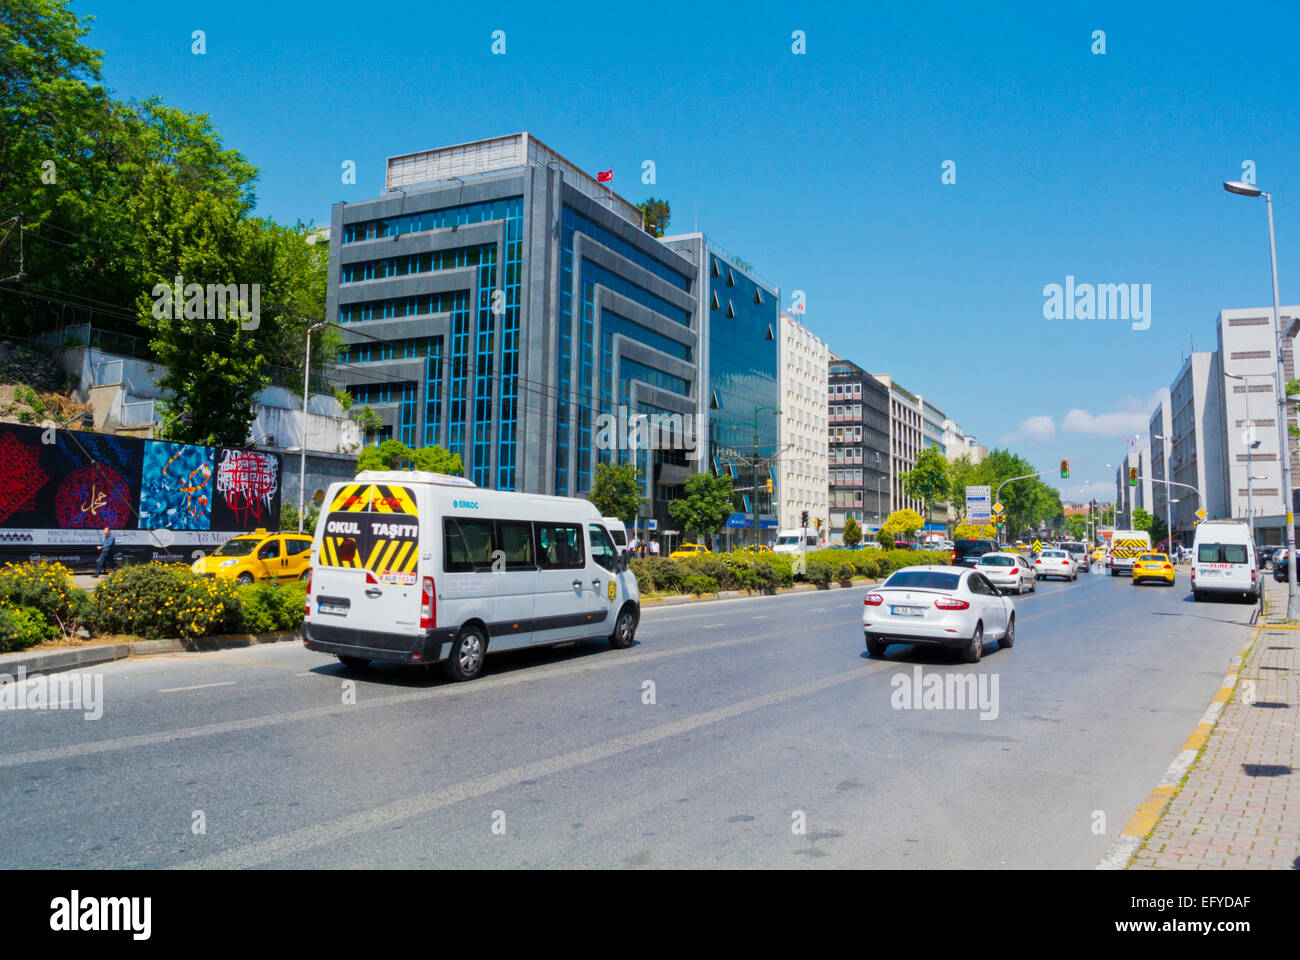 Meclis e Mebusan caddesi street, Kabatas district, Istanbul, Turkey, Europe Stock Photo